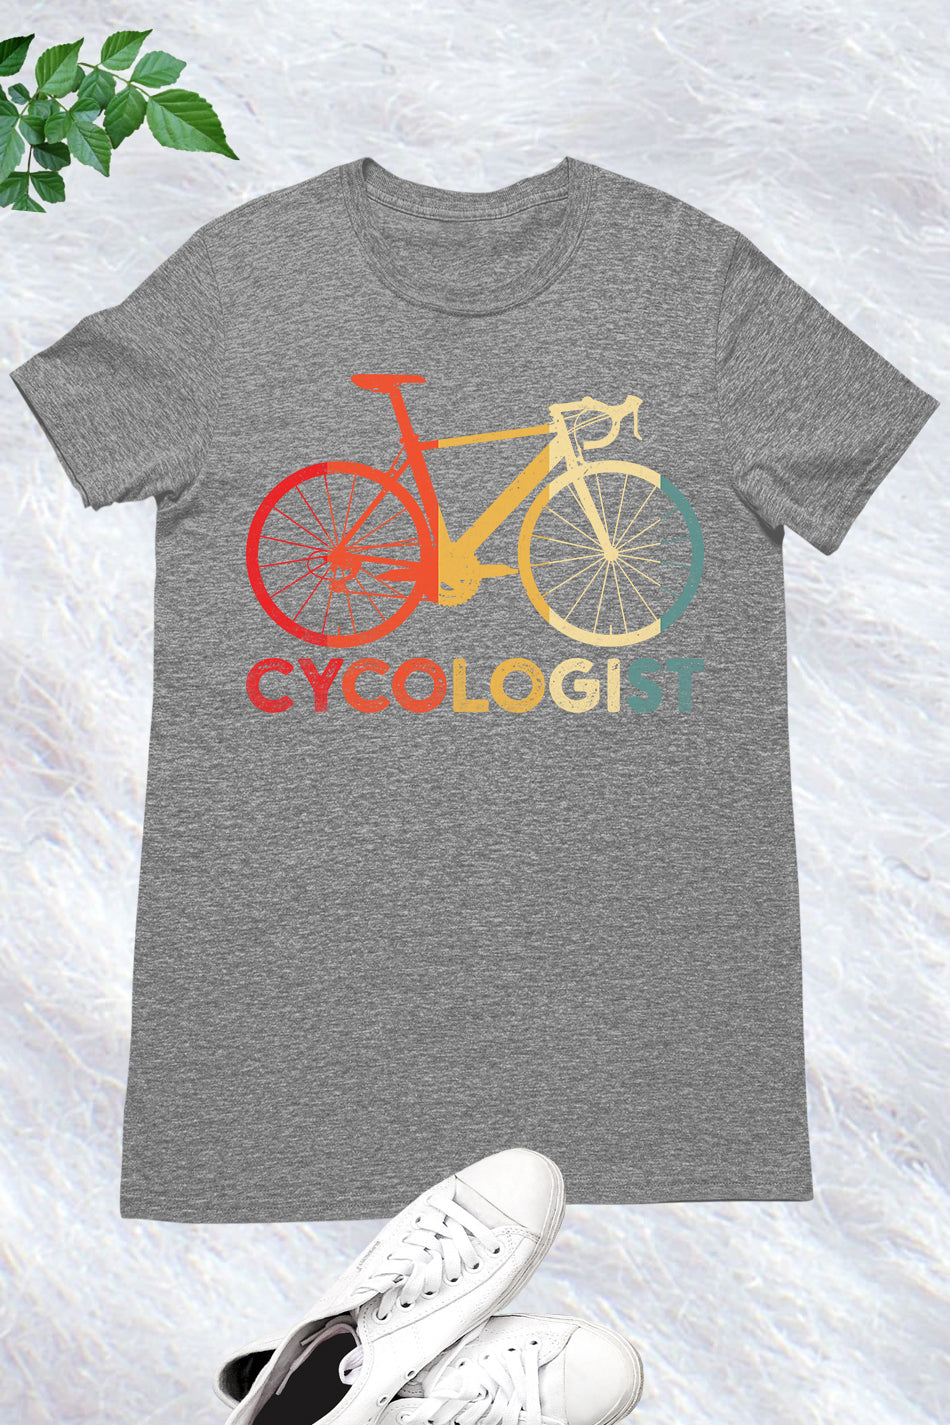 Cycologist Bicycle Retro Cycling T-shirt